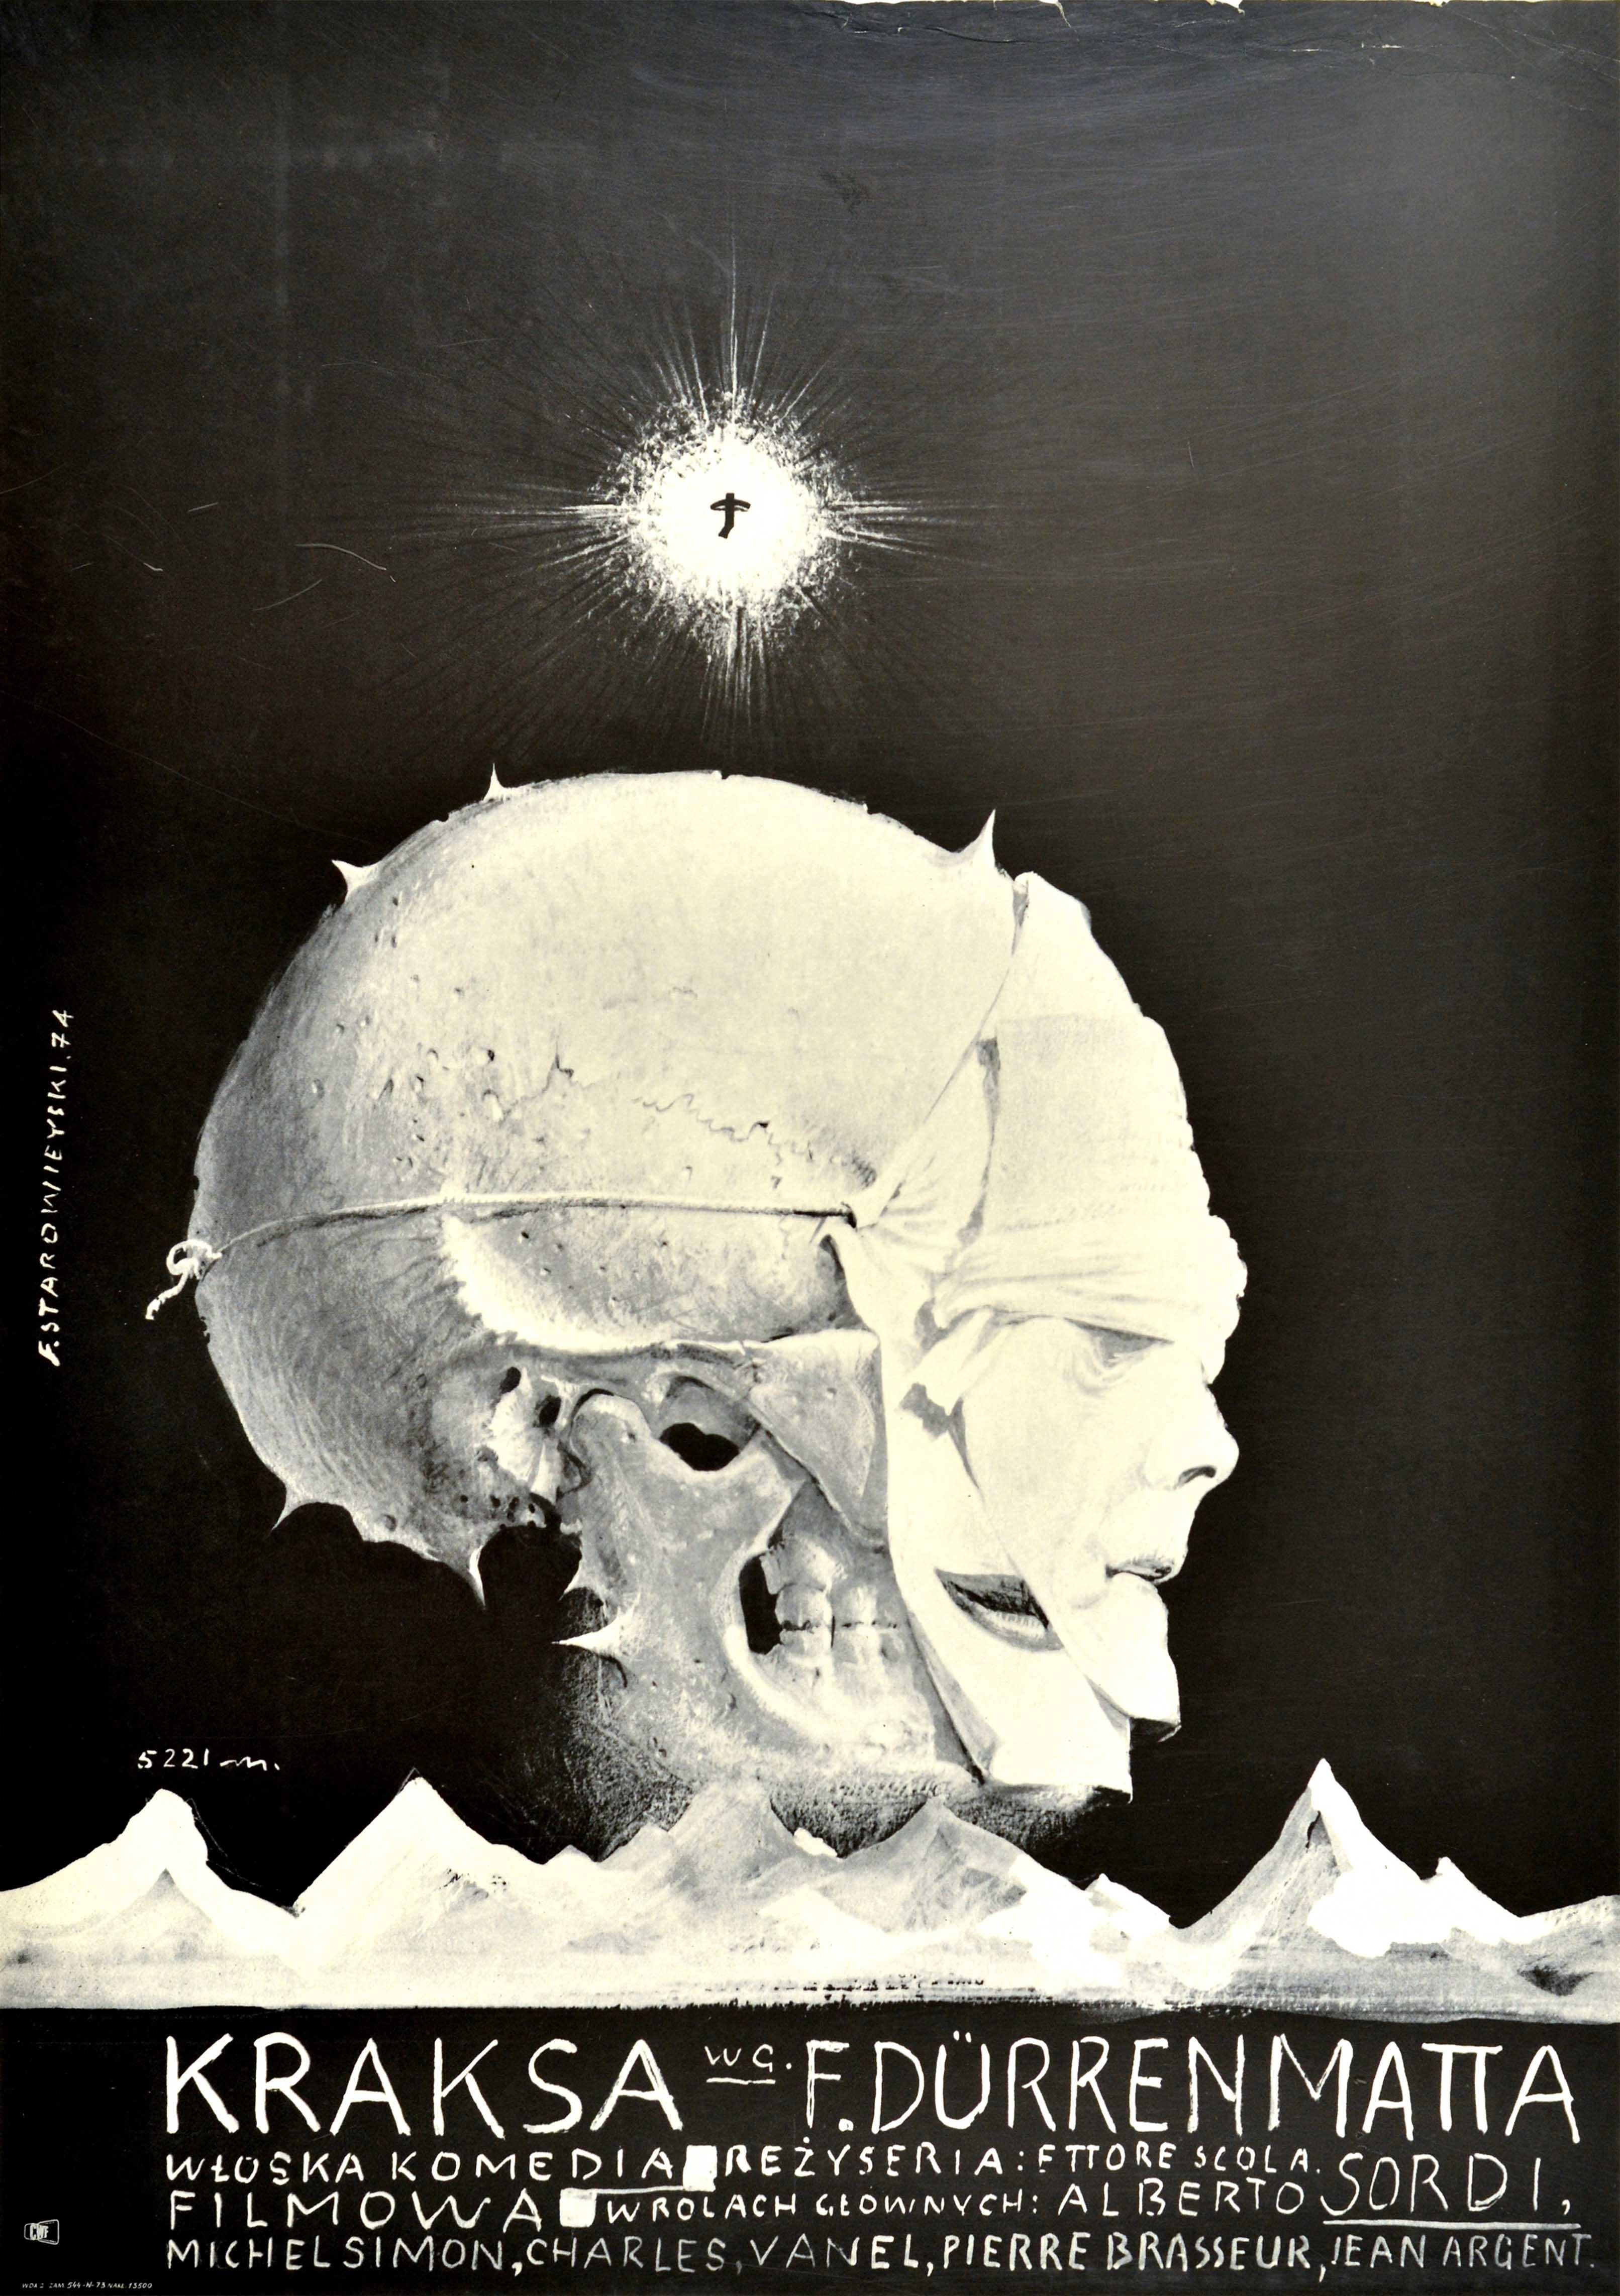 Franciszek Starowieyski Print - Original Vintage Polish Release Film Poster Kraksa Mask Design A Dangerous Game